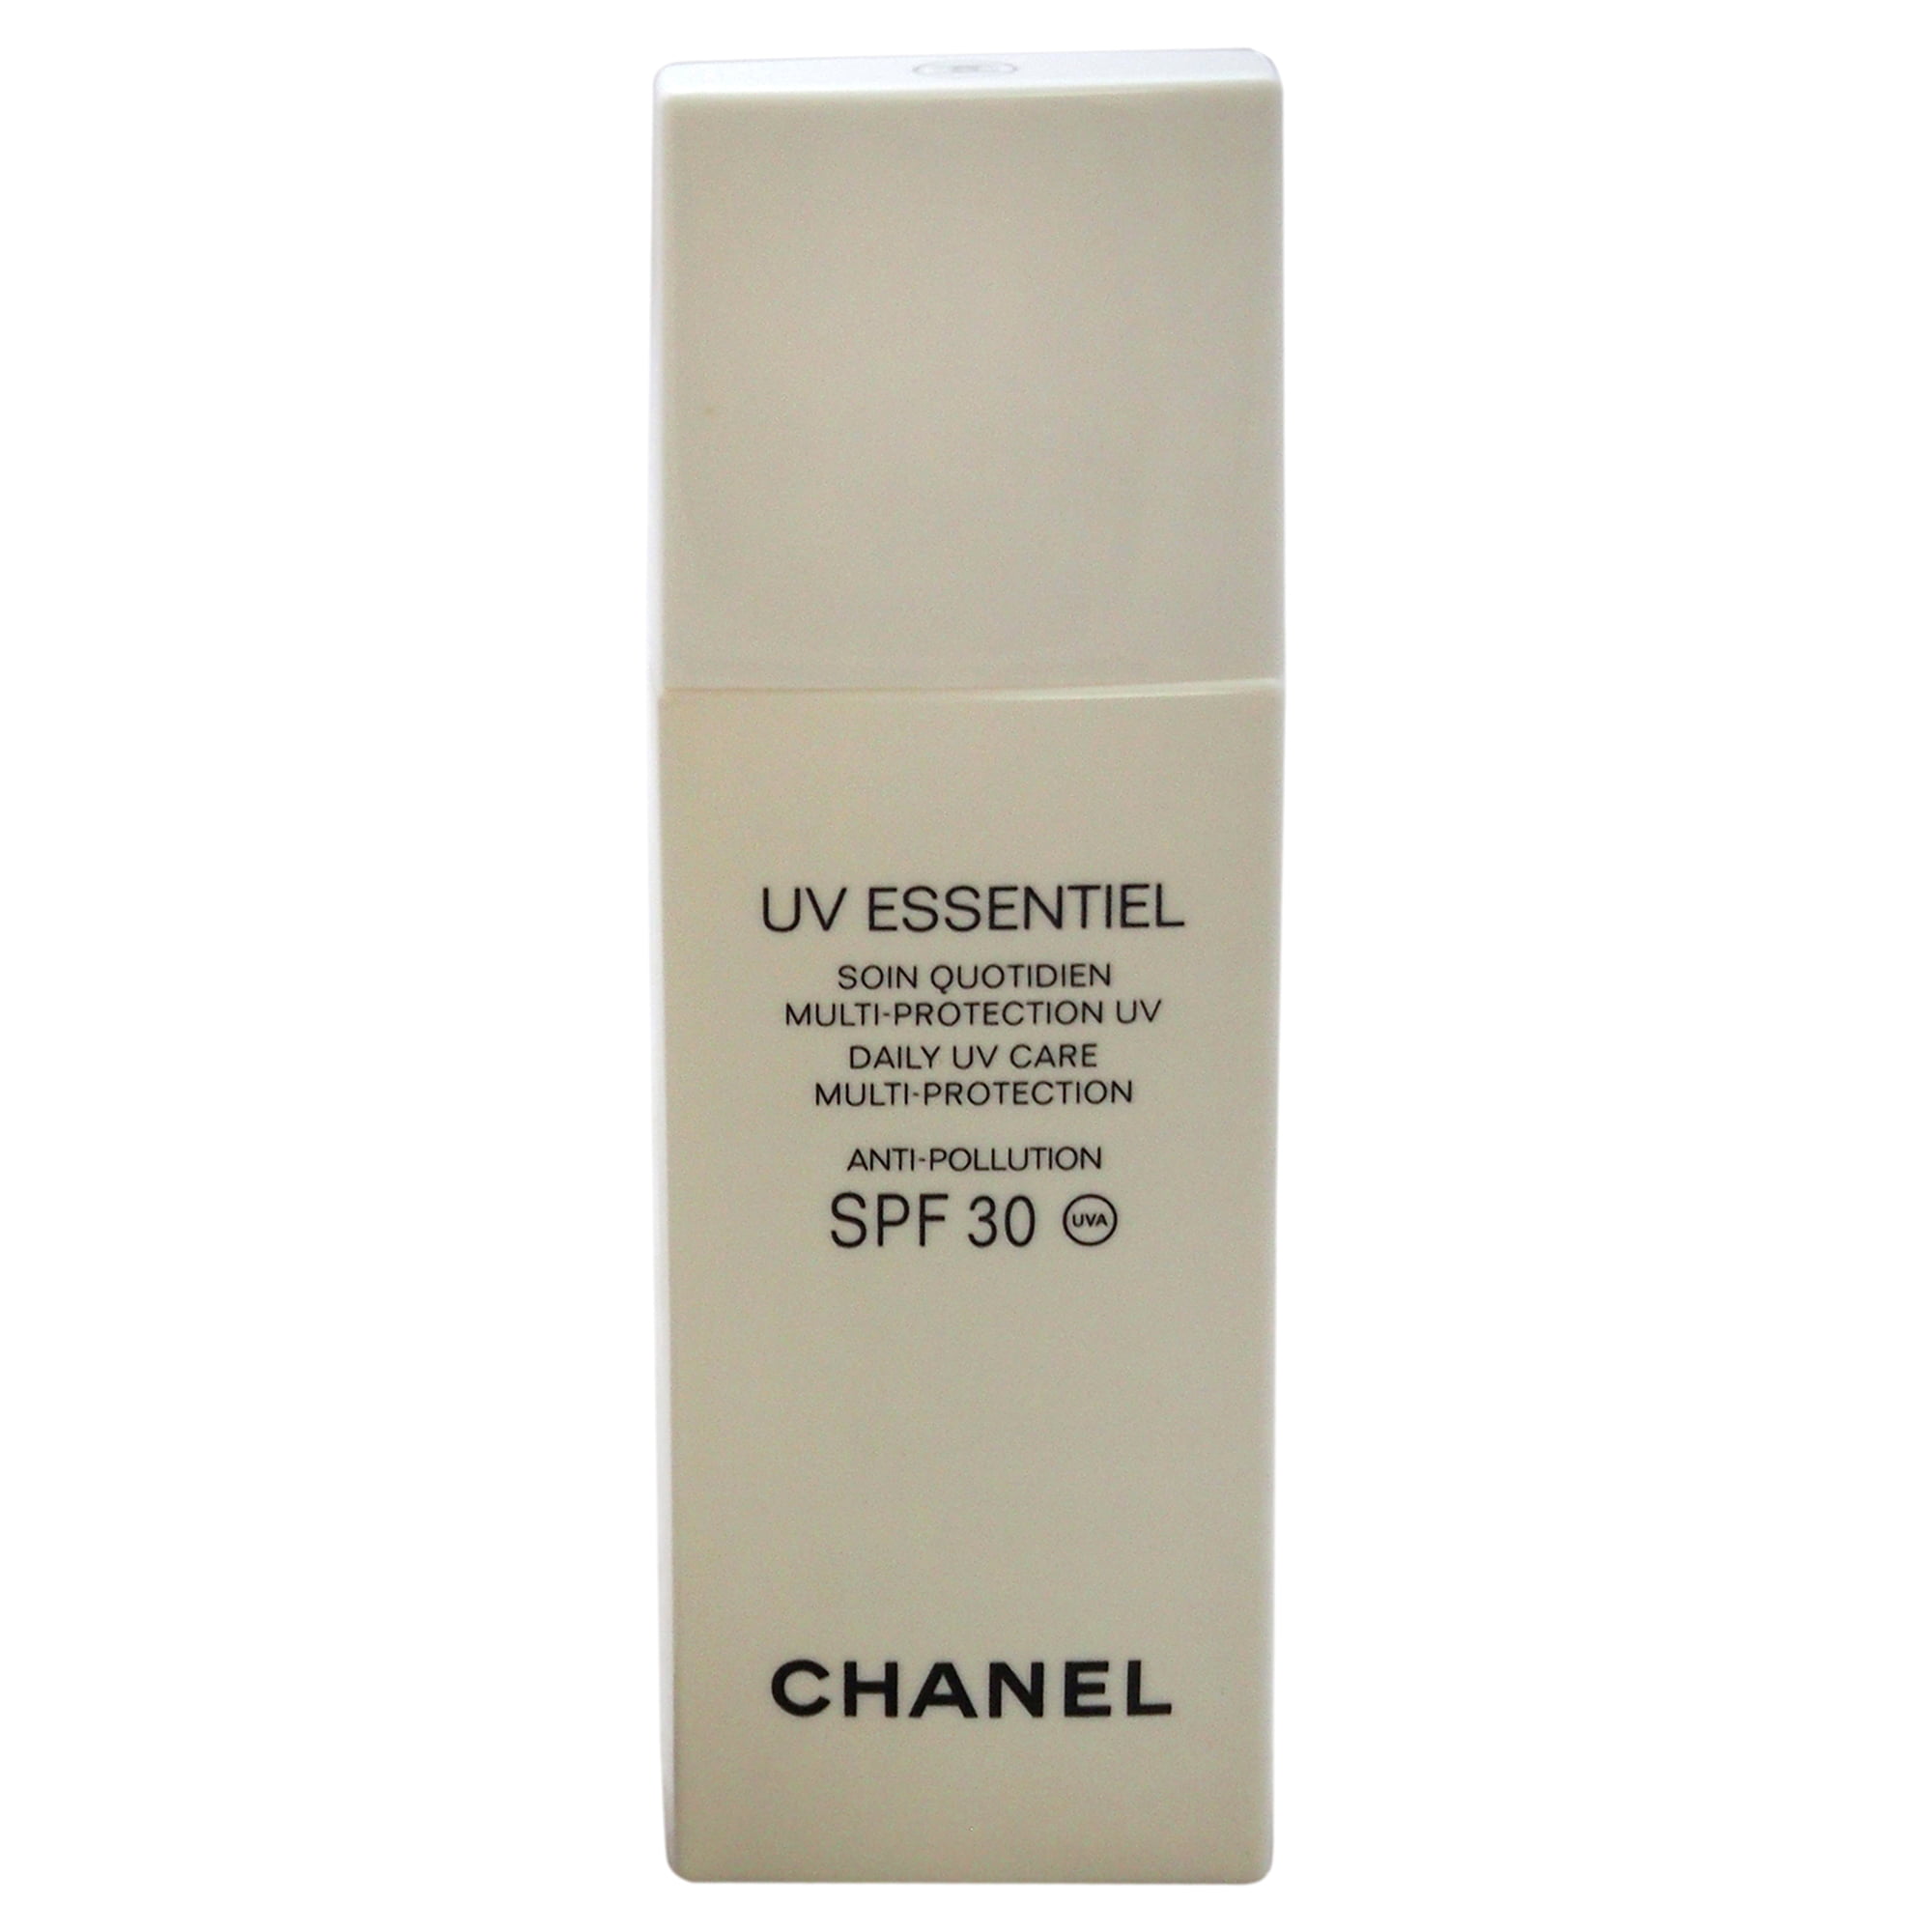 Chanel UV Essentiel Multi-Protection Daily Defender SPF 30